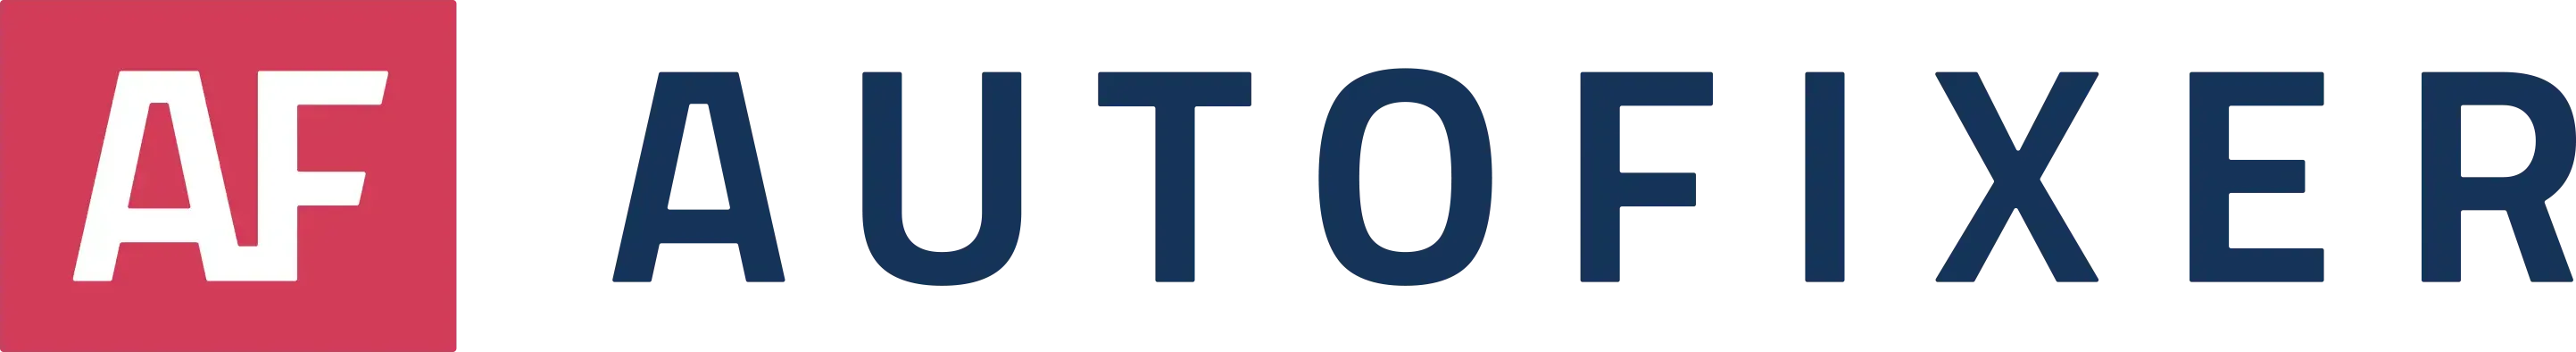 Autofixer logo